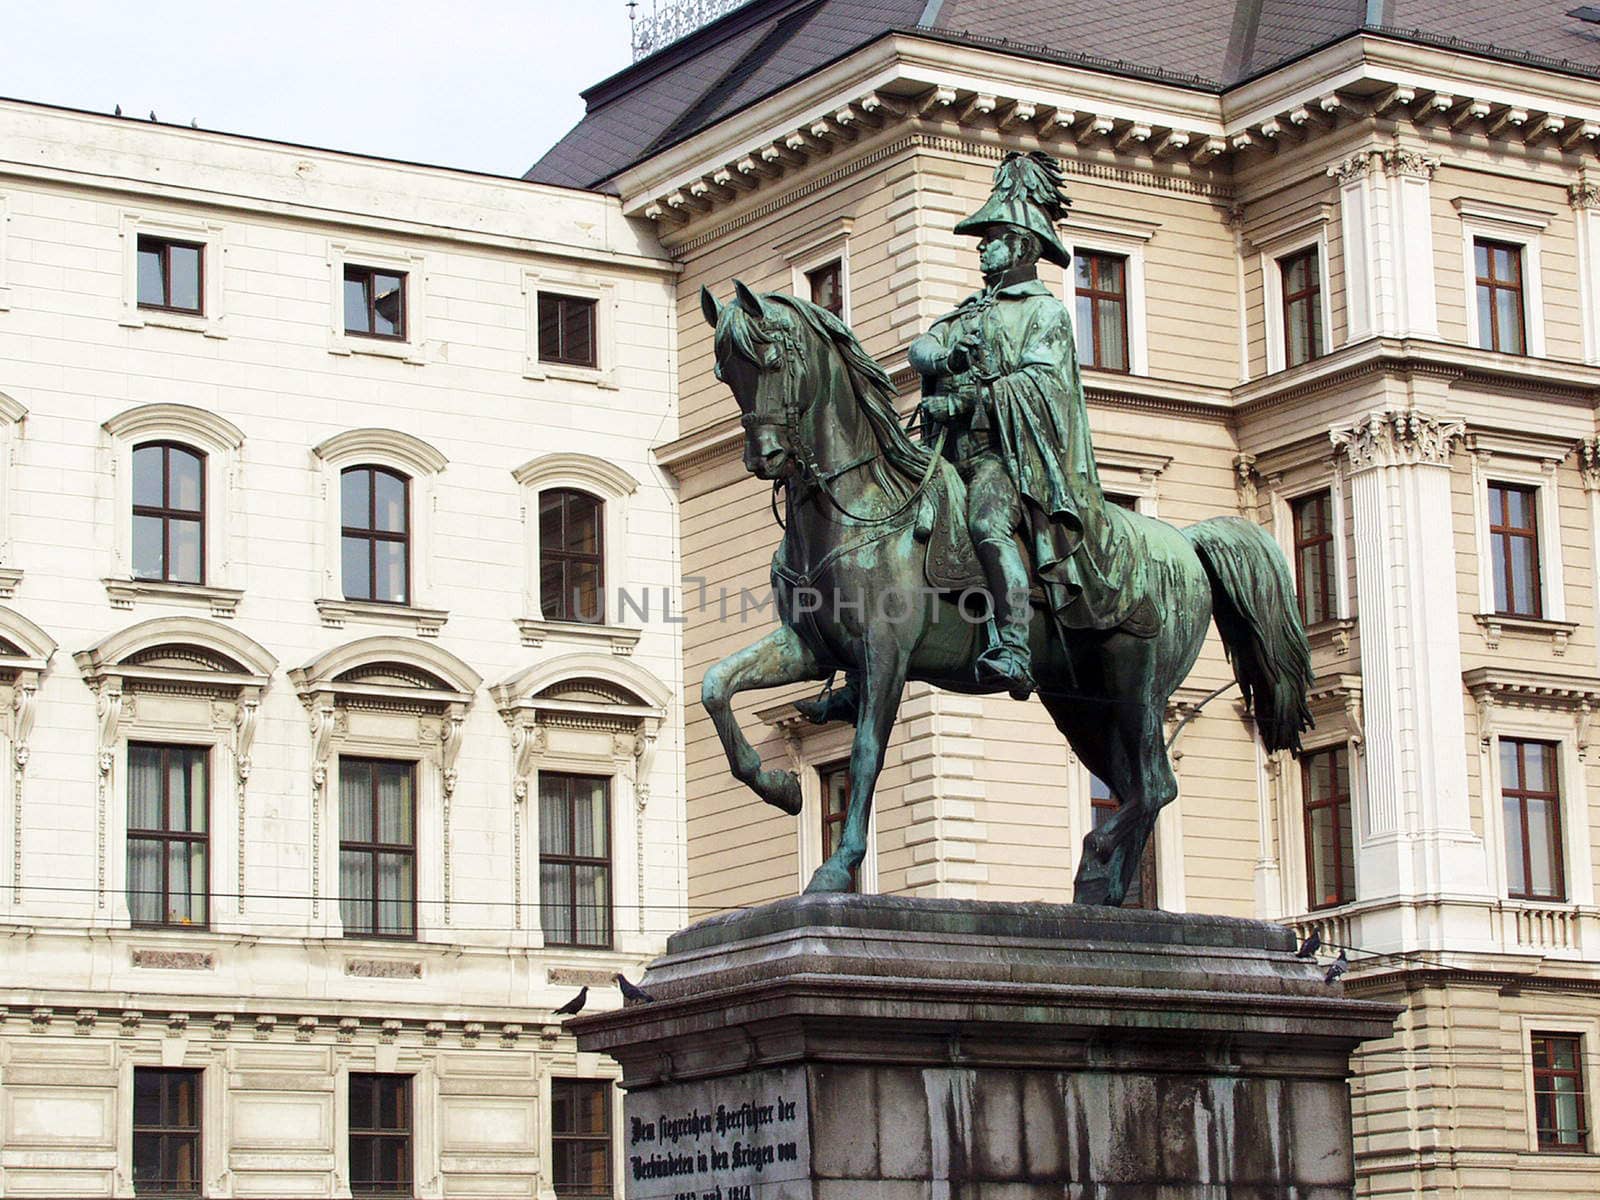 Vienna, Austria. Urban architecture. The equestrian statue of Emperor by NickNick